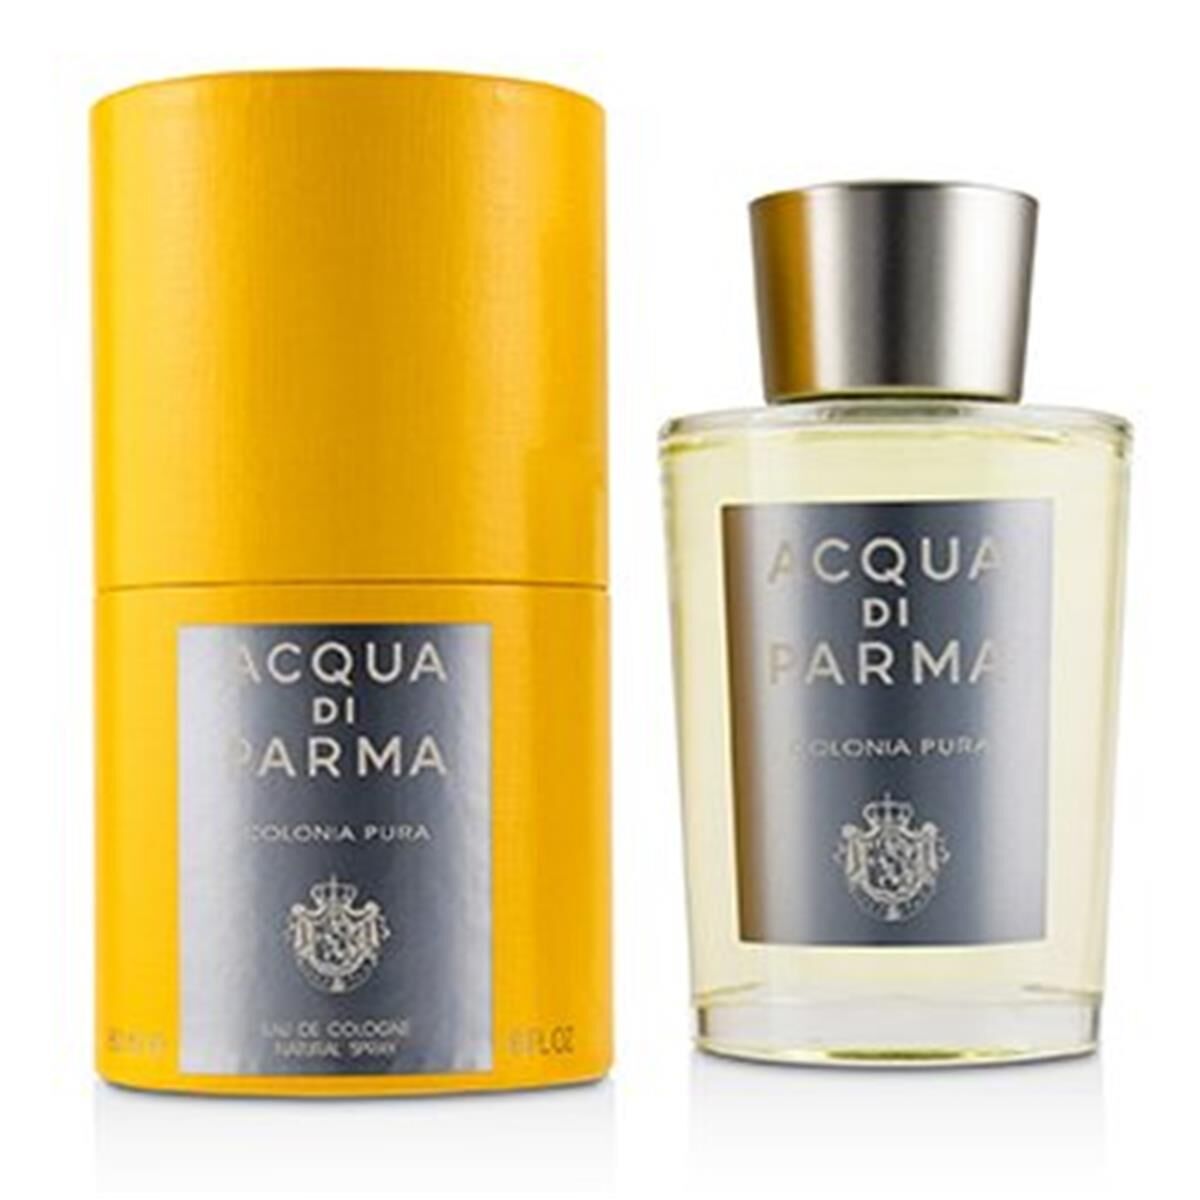 Acqua Di Parma 228816 6 oz Colonia Pura Eau De Cologne Spray for Mens - yellow - Size: One Size